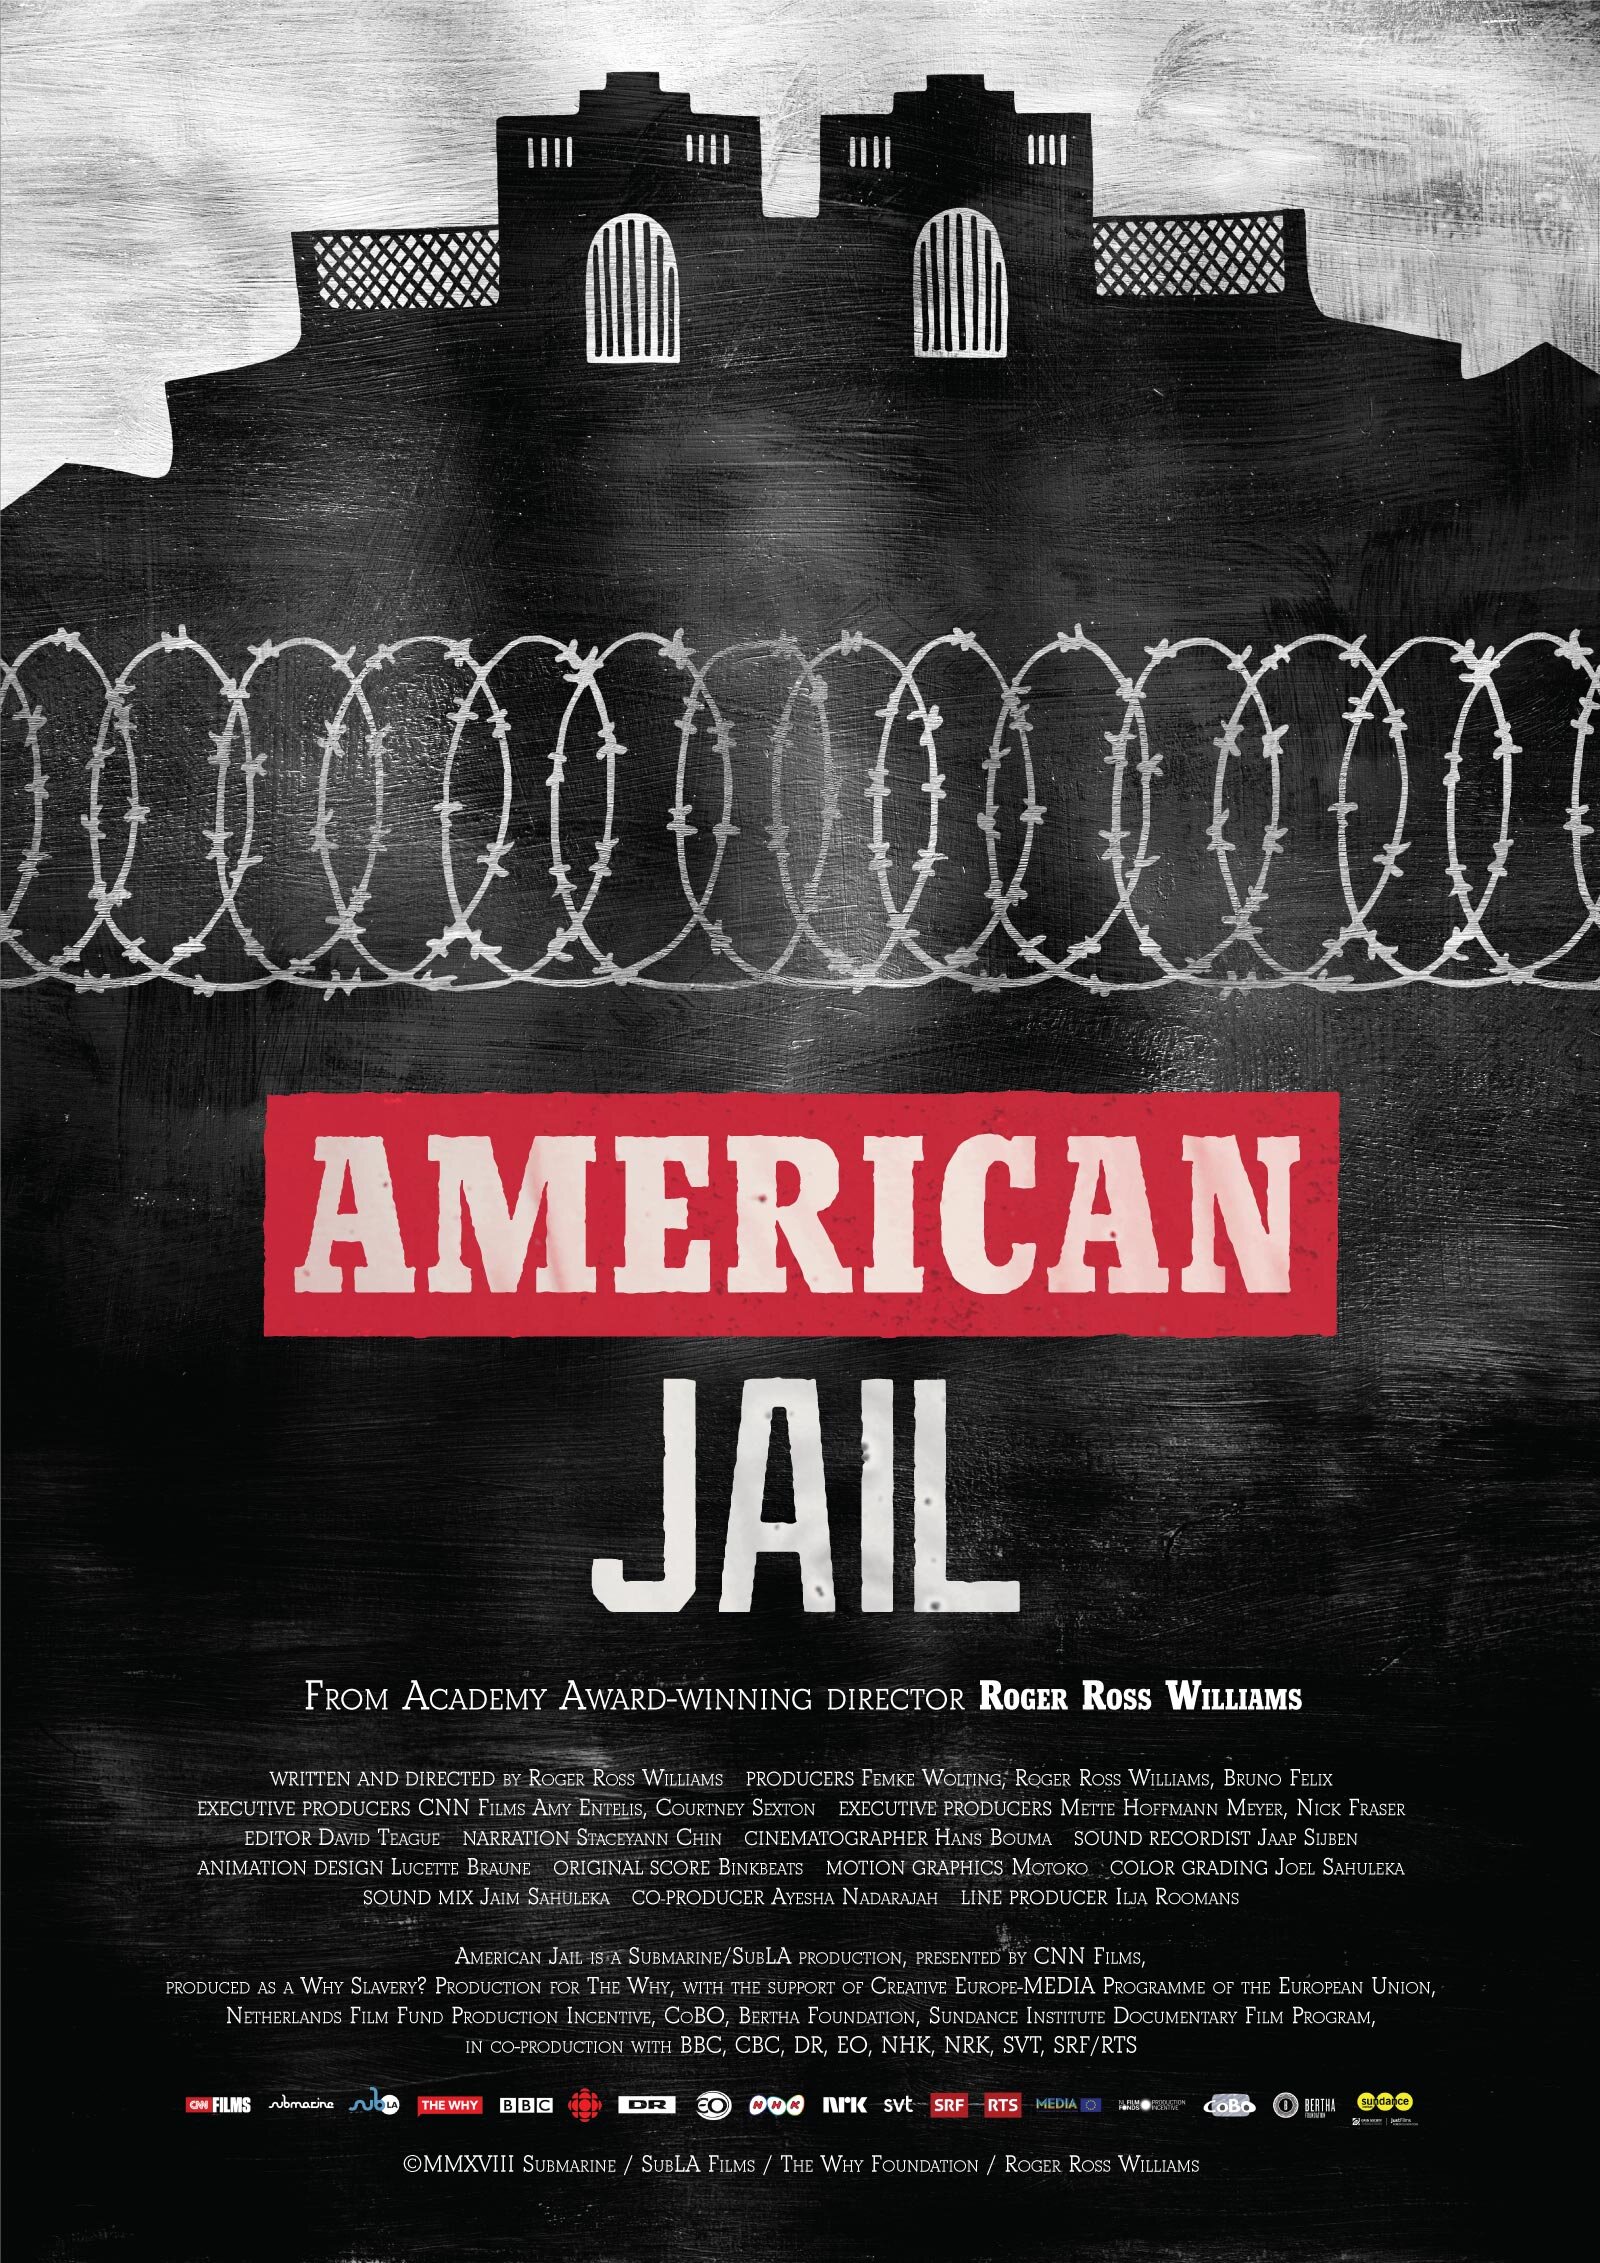 American Jail trailer